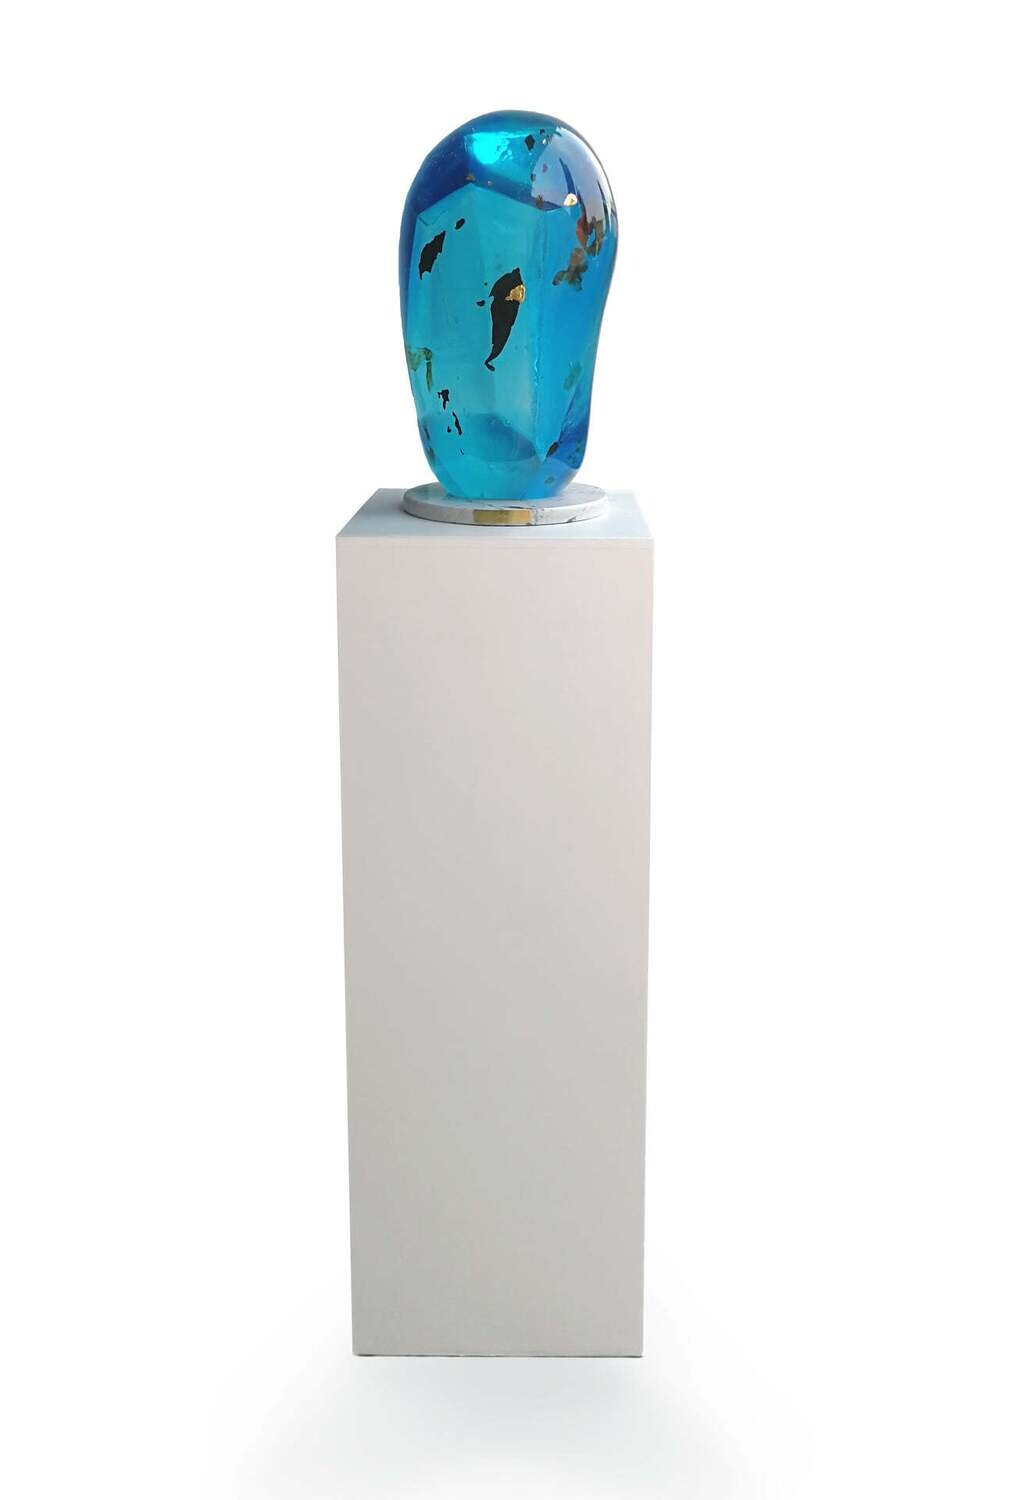 Kamila Stępniak, Blue Transparent Stone, 2021